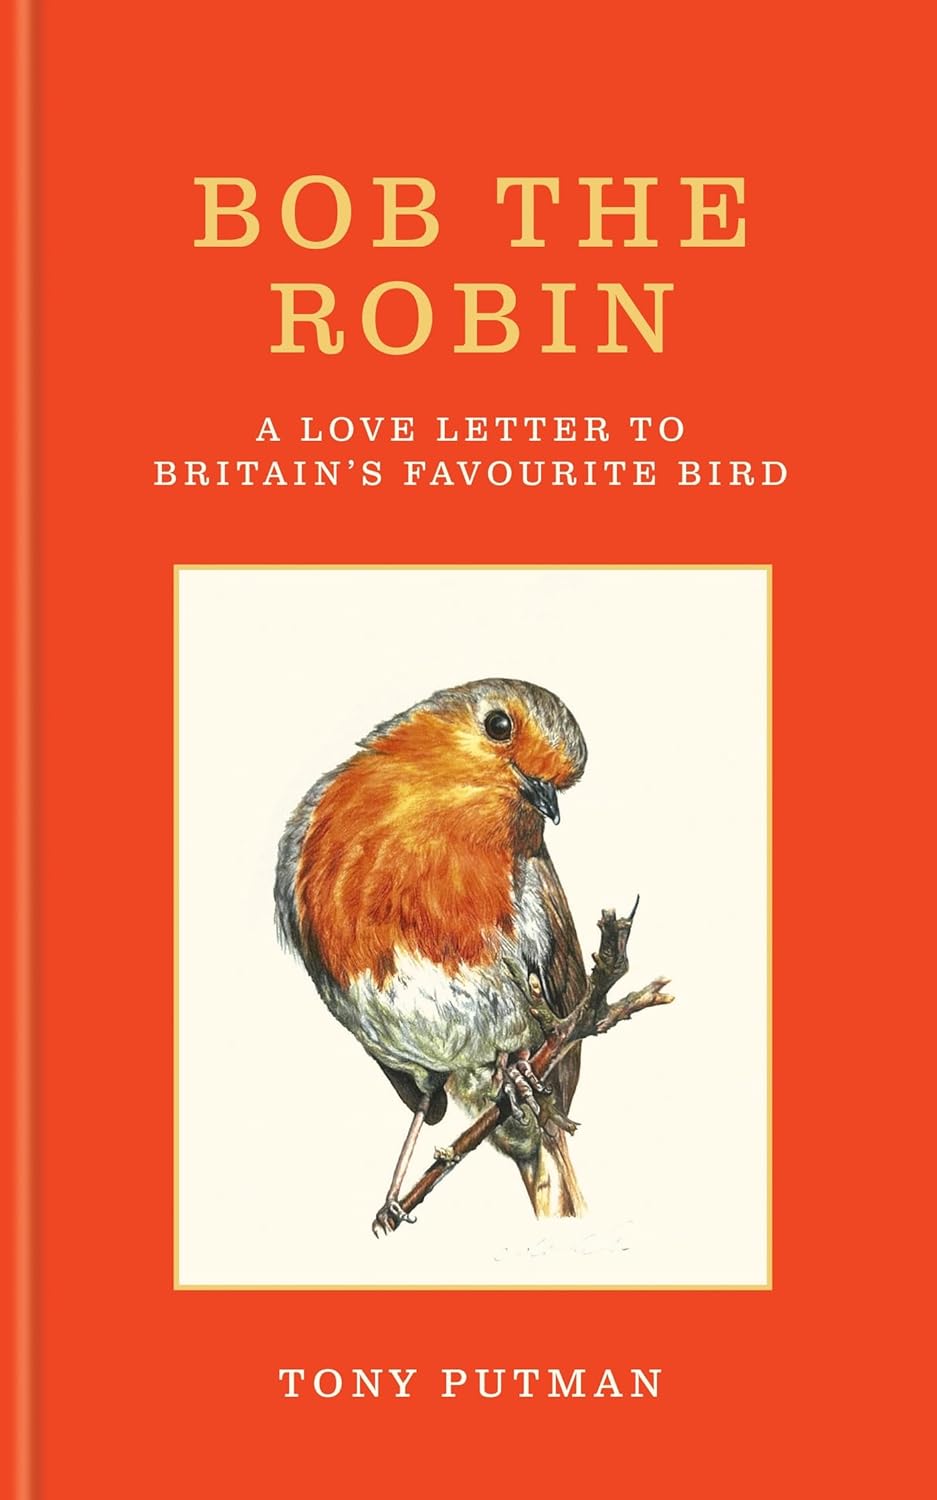 how well do you know England’s native birds?